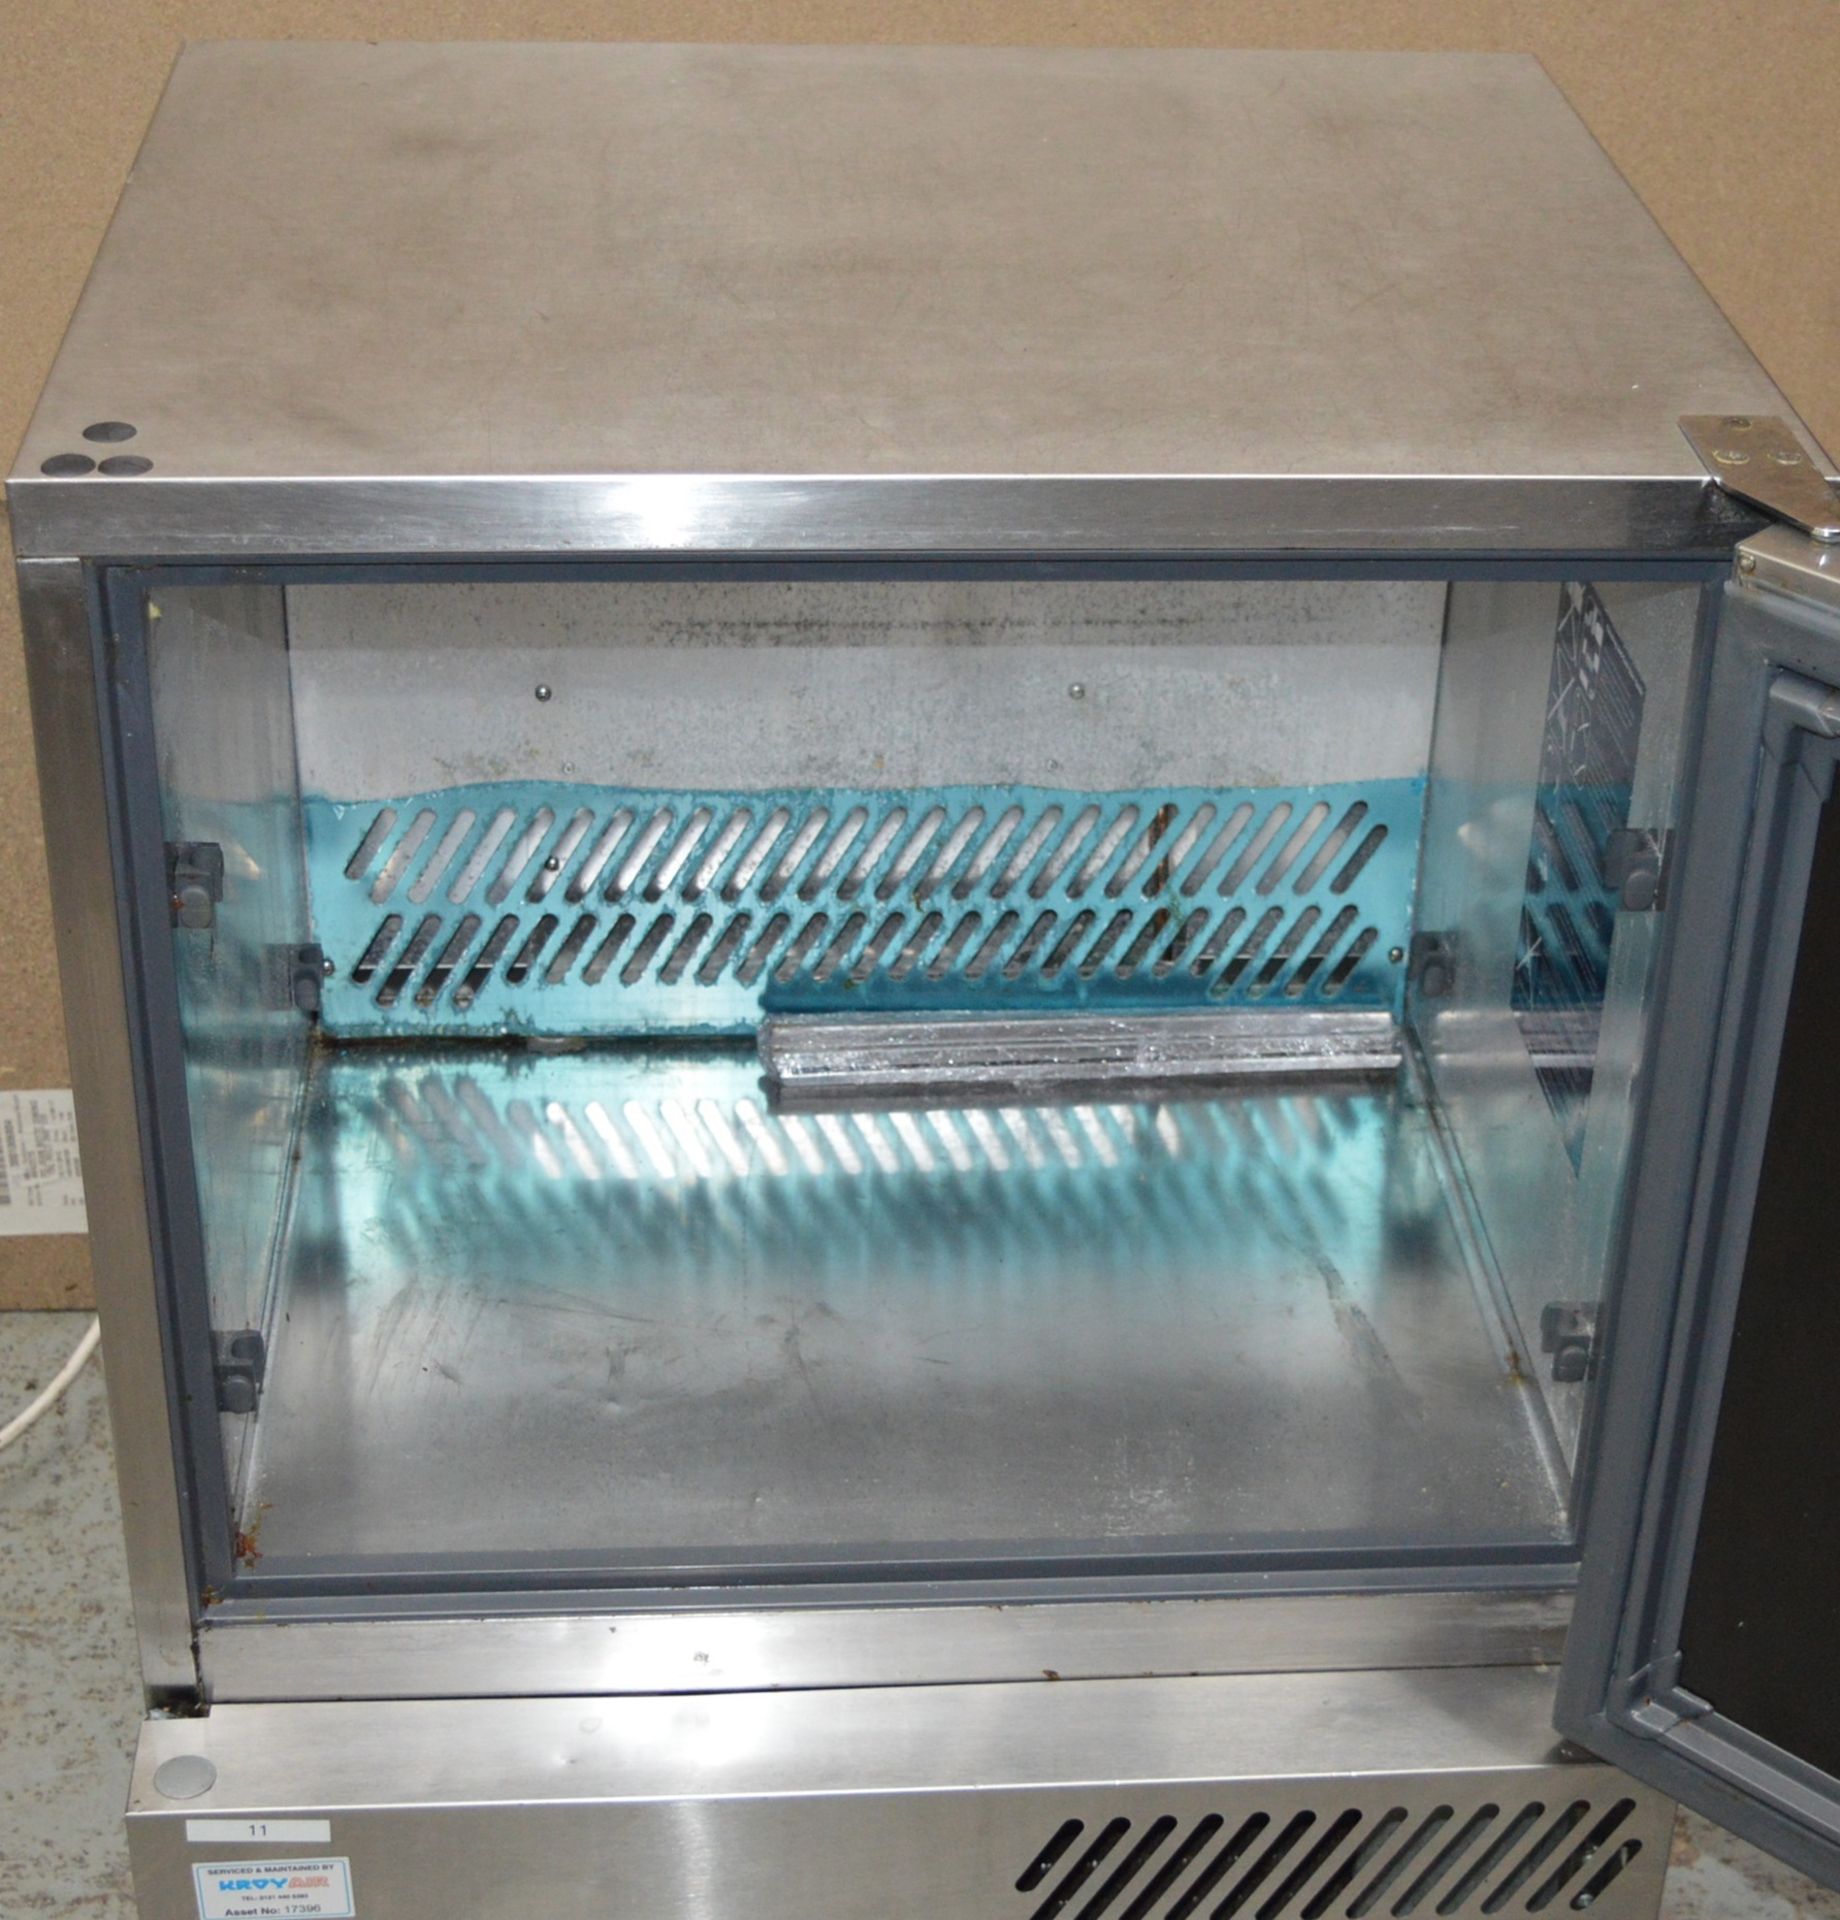 1 x Williams Single Door Under Counter Refridgerator - Model H5UC - Stainless Steel Finish - - Image 6 of 9